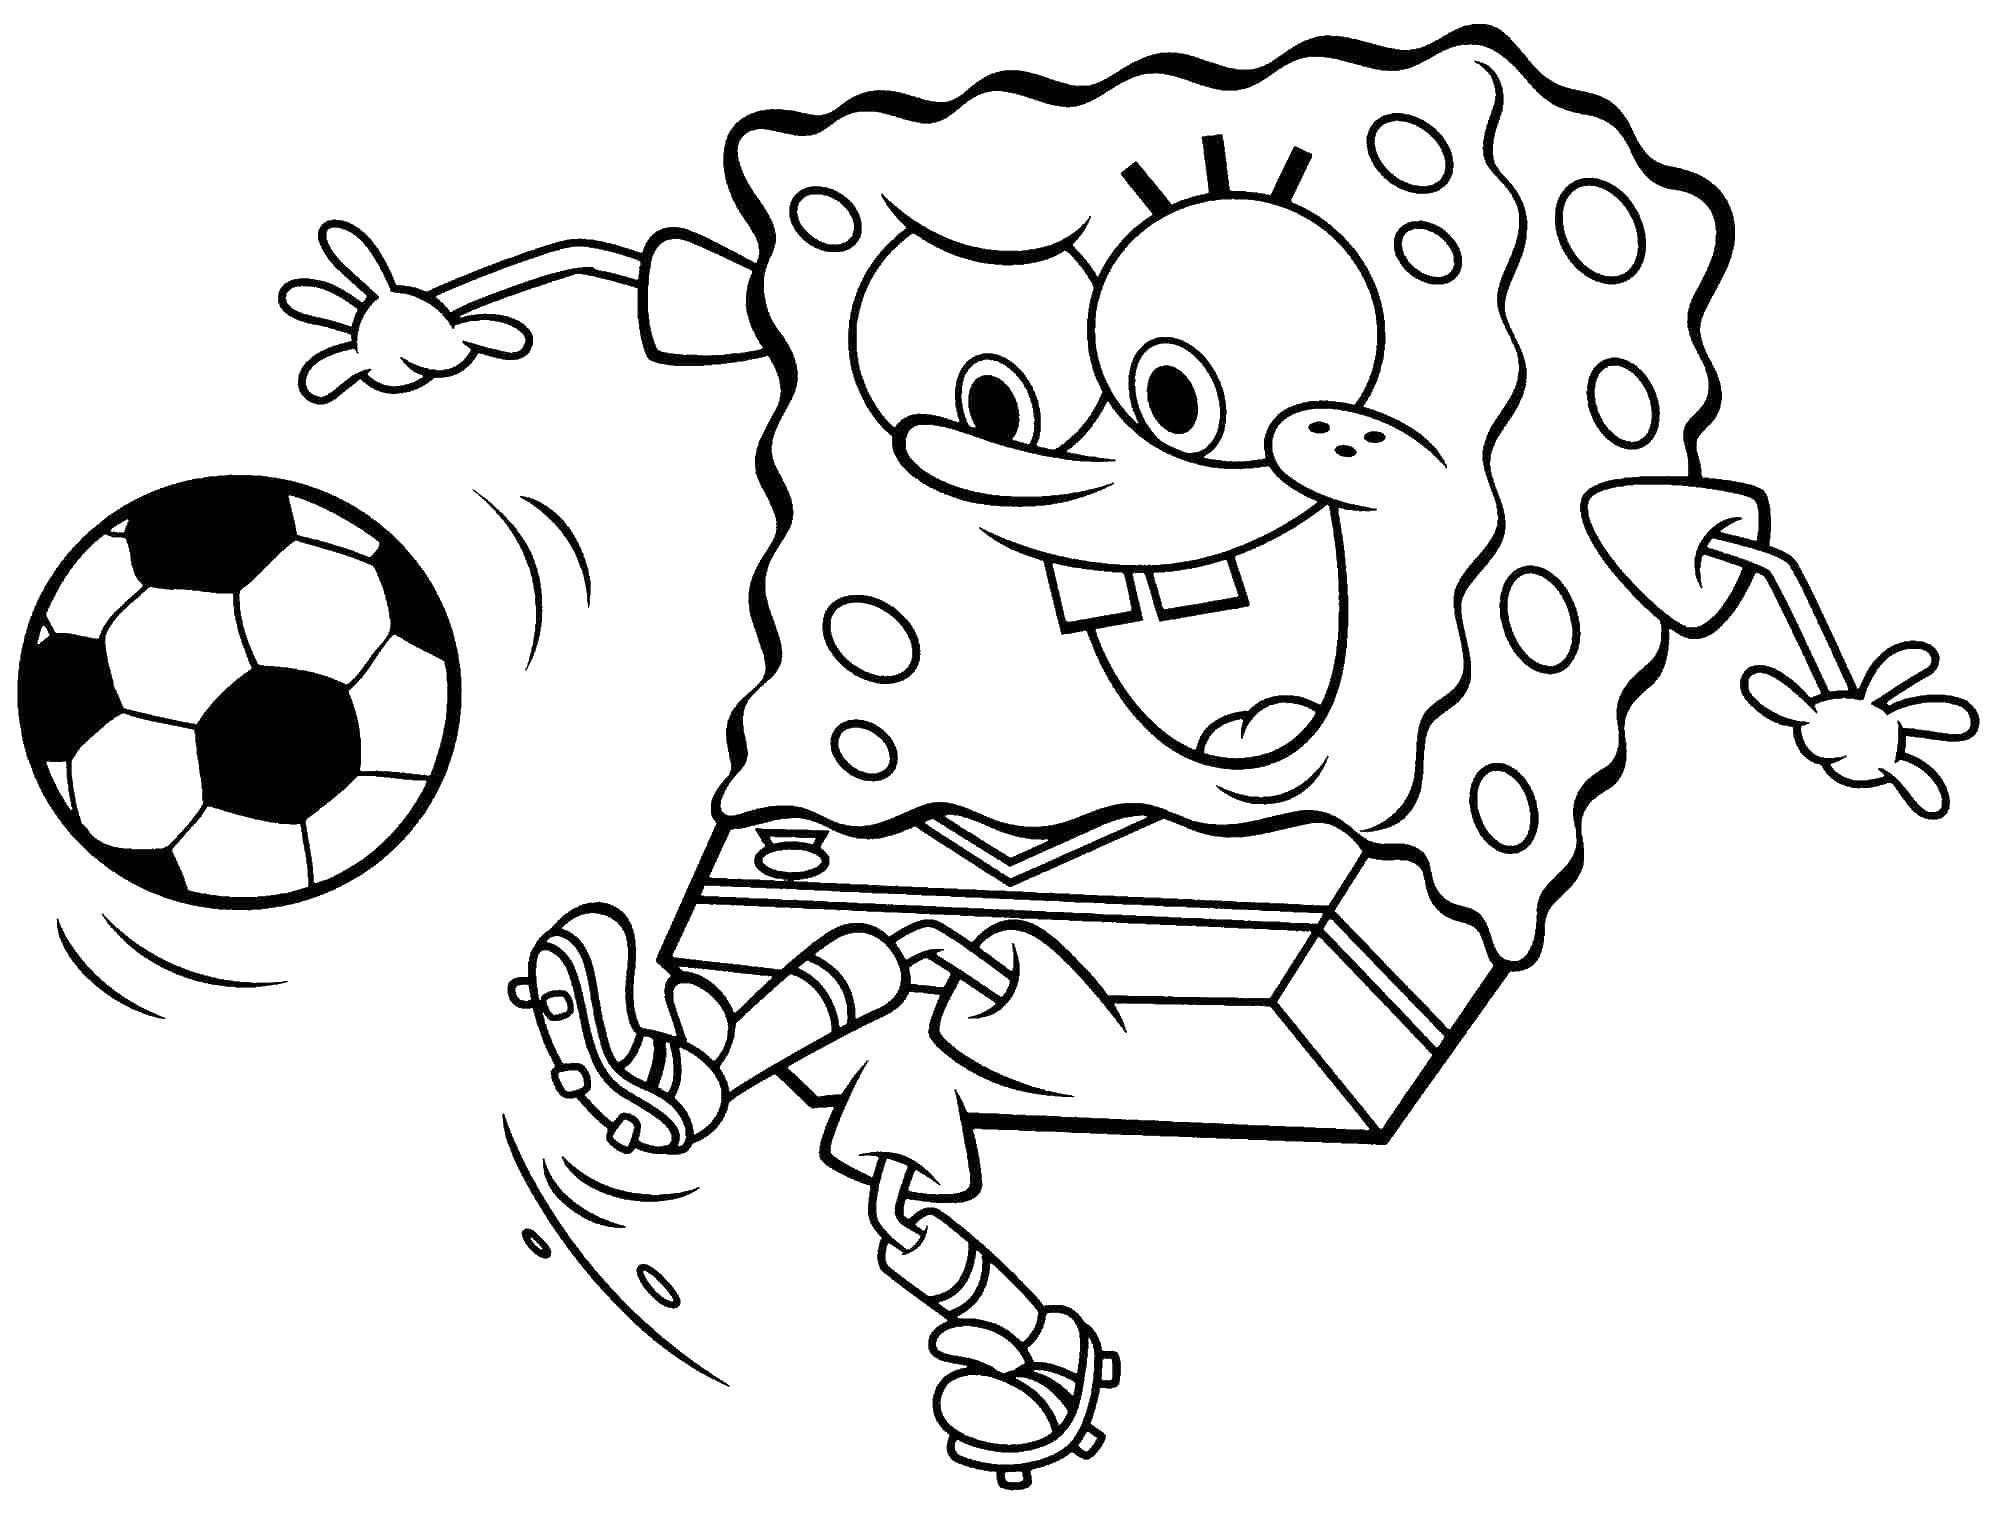 Coloring Spongebob with ball. Category Spongebob. Tags:  Spongebob, sports, soccer.